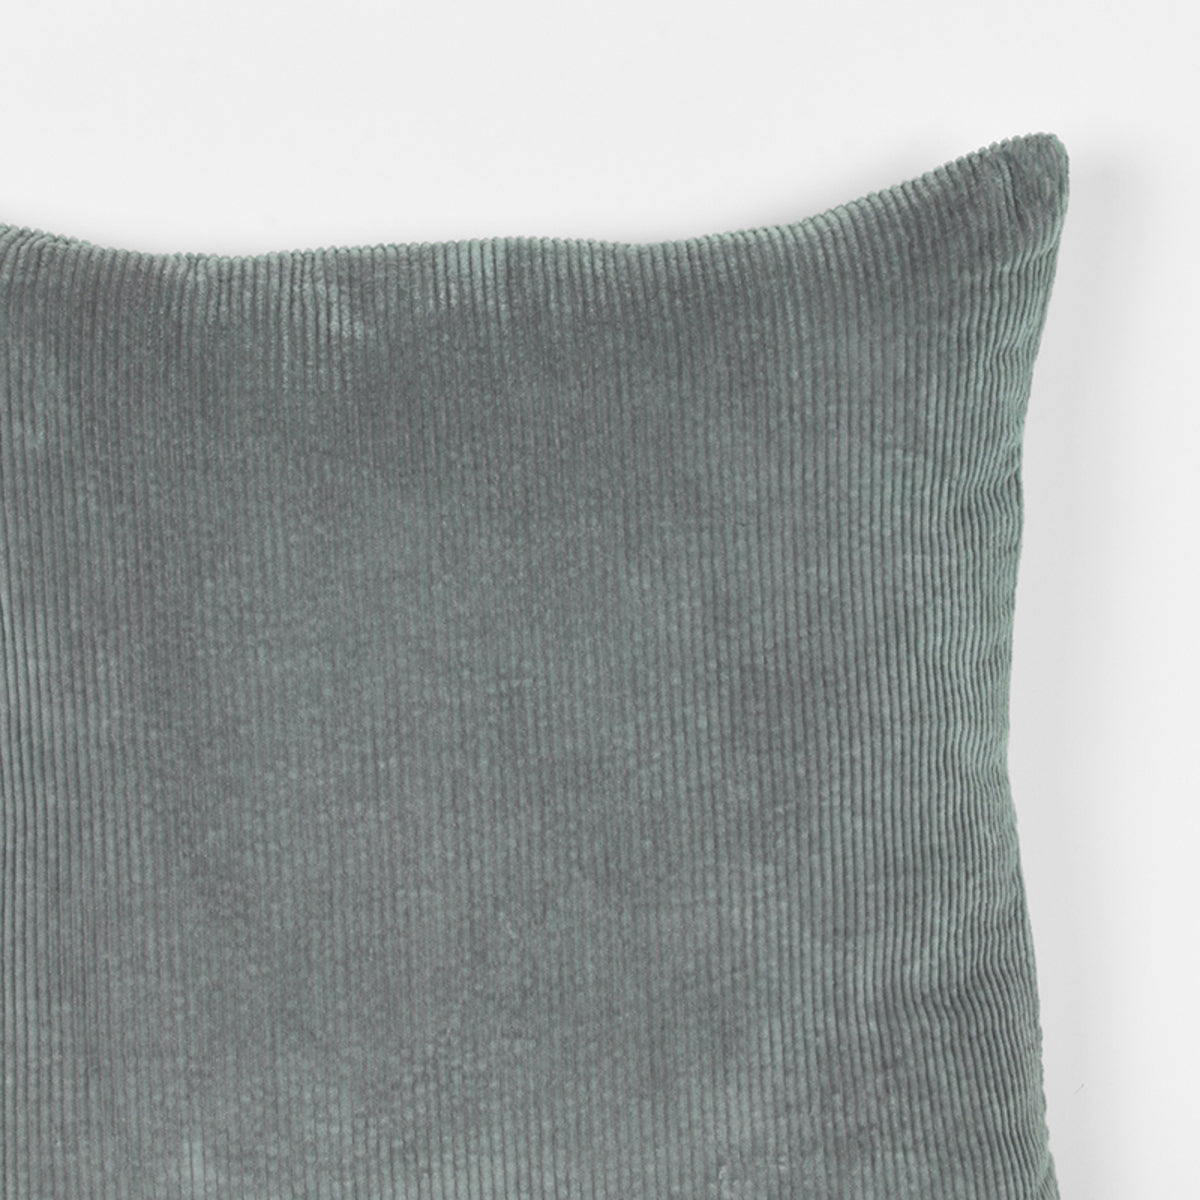 LABEL51 Decorative cushion Rib - Mint - Cotton